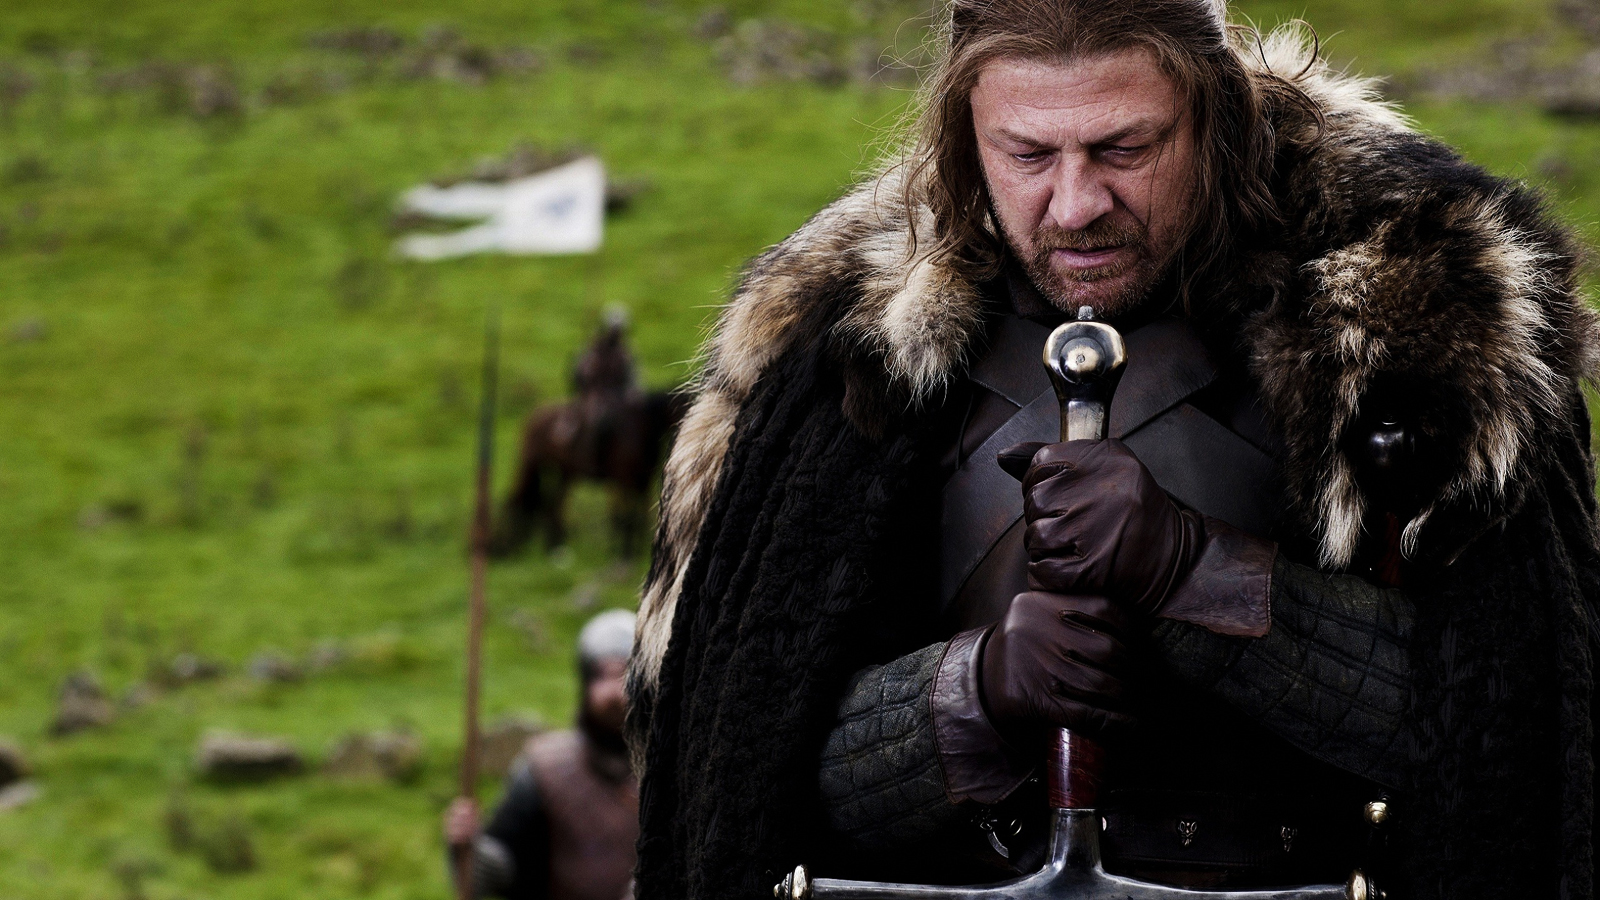 Sean Bean as Eddard Stark Game of Thrones HD Wallpapers| HD Wallpapers ...